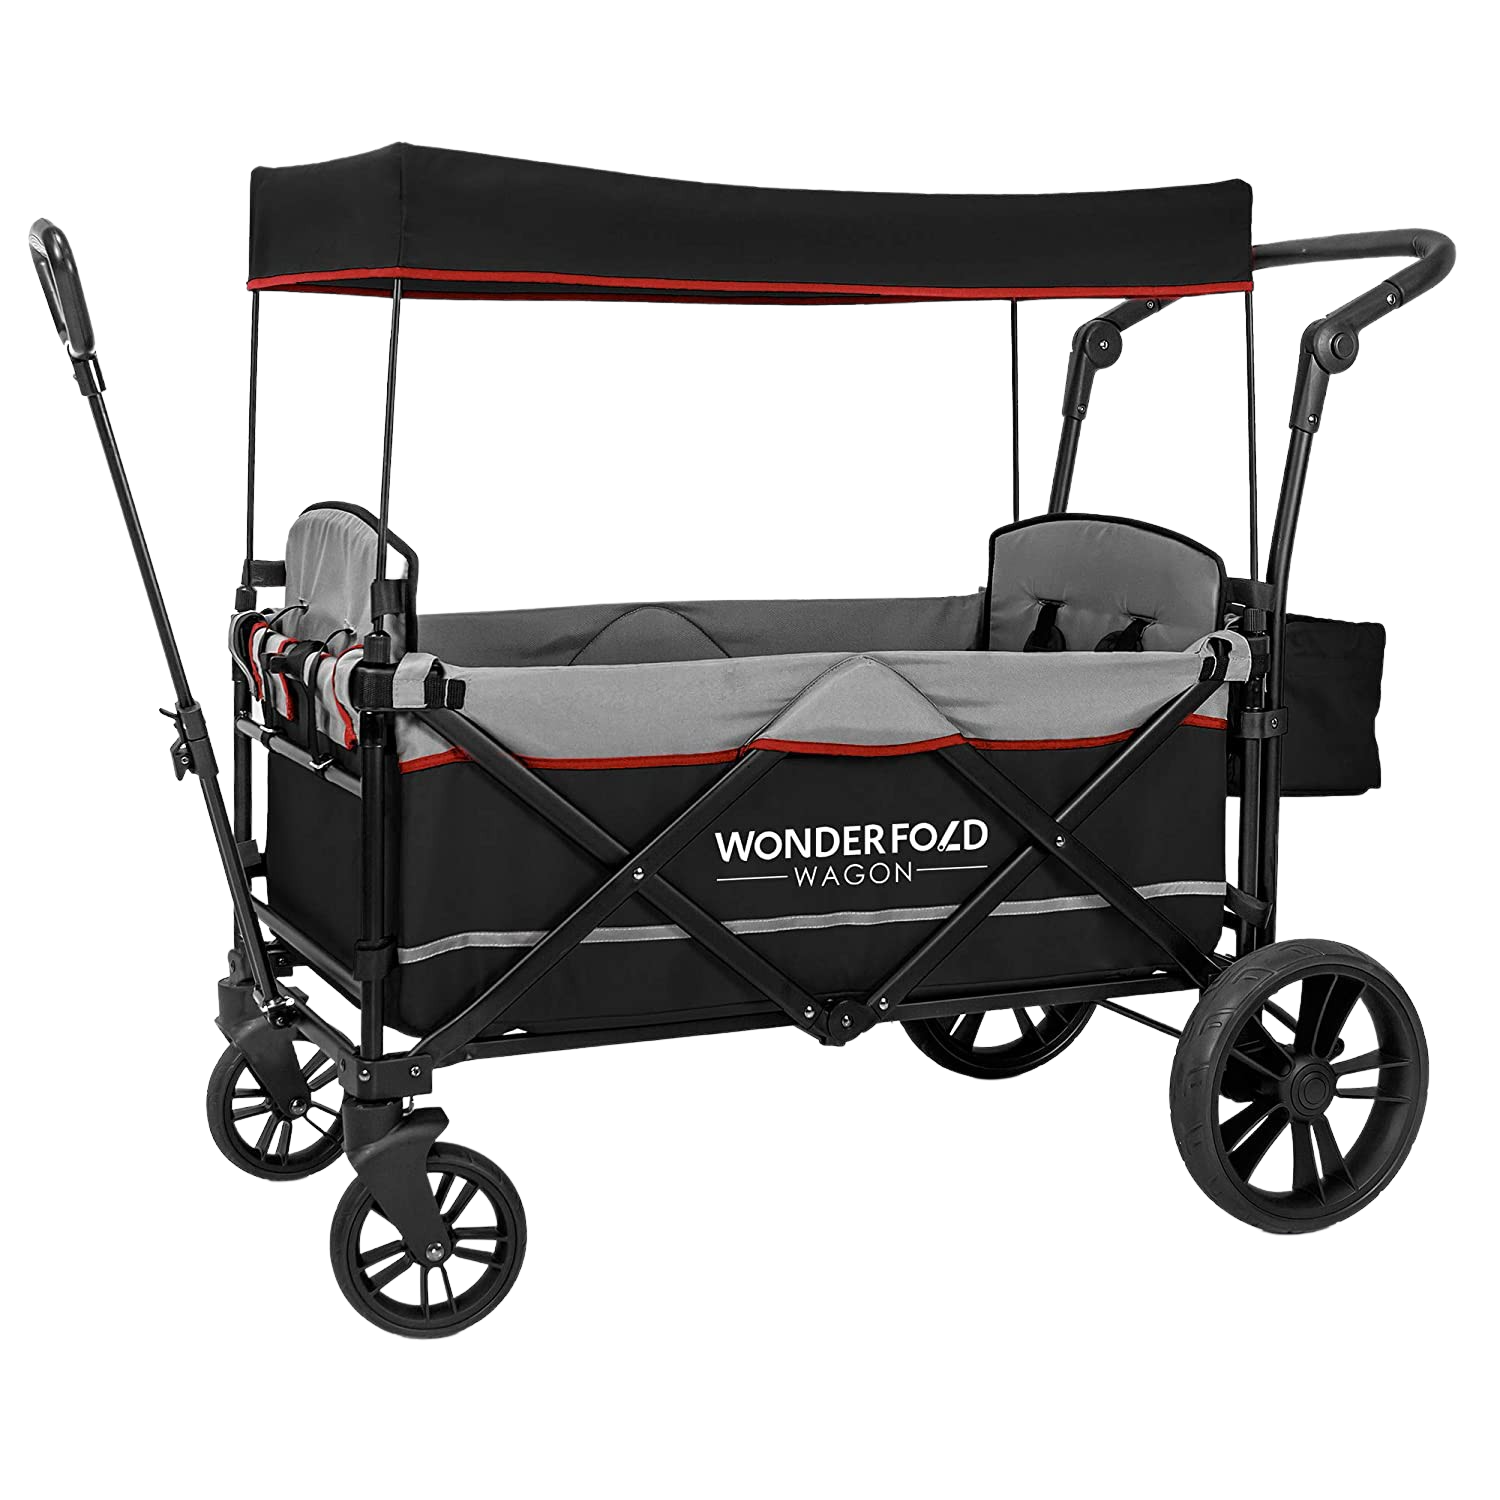 WonderFold Baby, WonderFold Baby X2 Push/Pull 2-Passenger Double Stroller Wagon Black New